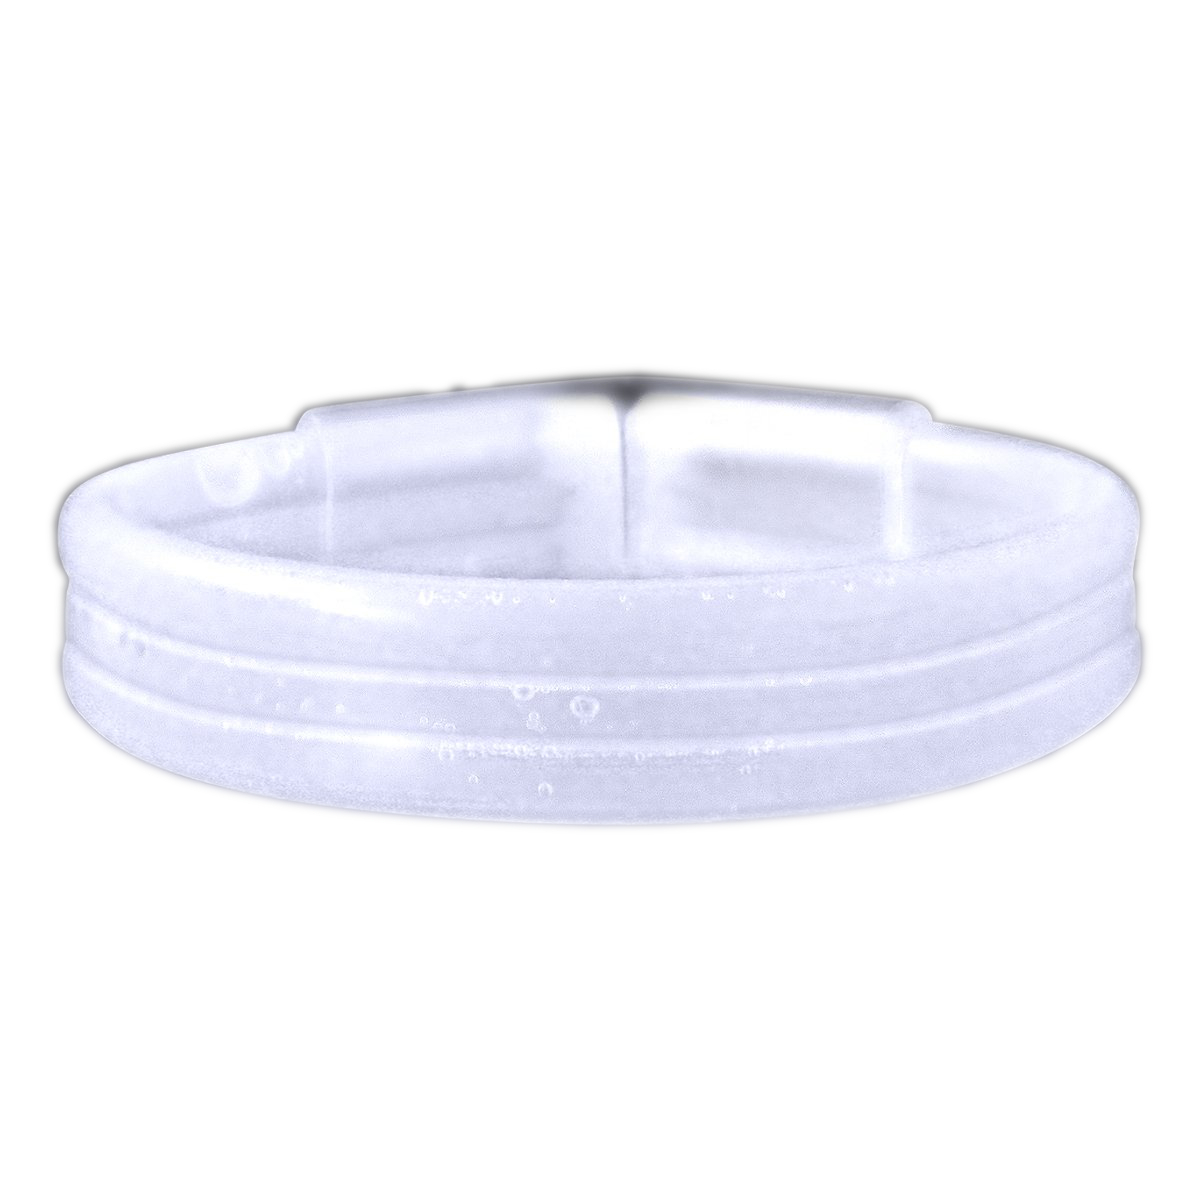 Wide GLOW STICK 8 Inch Bracelet White Pack of 25